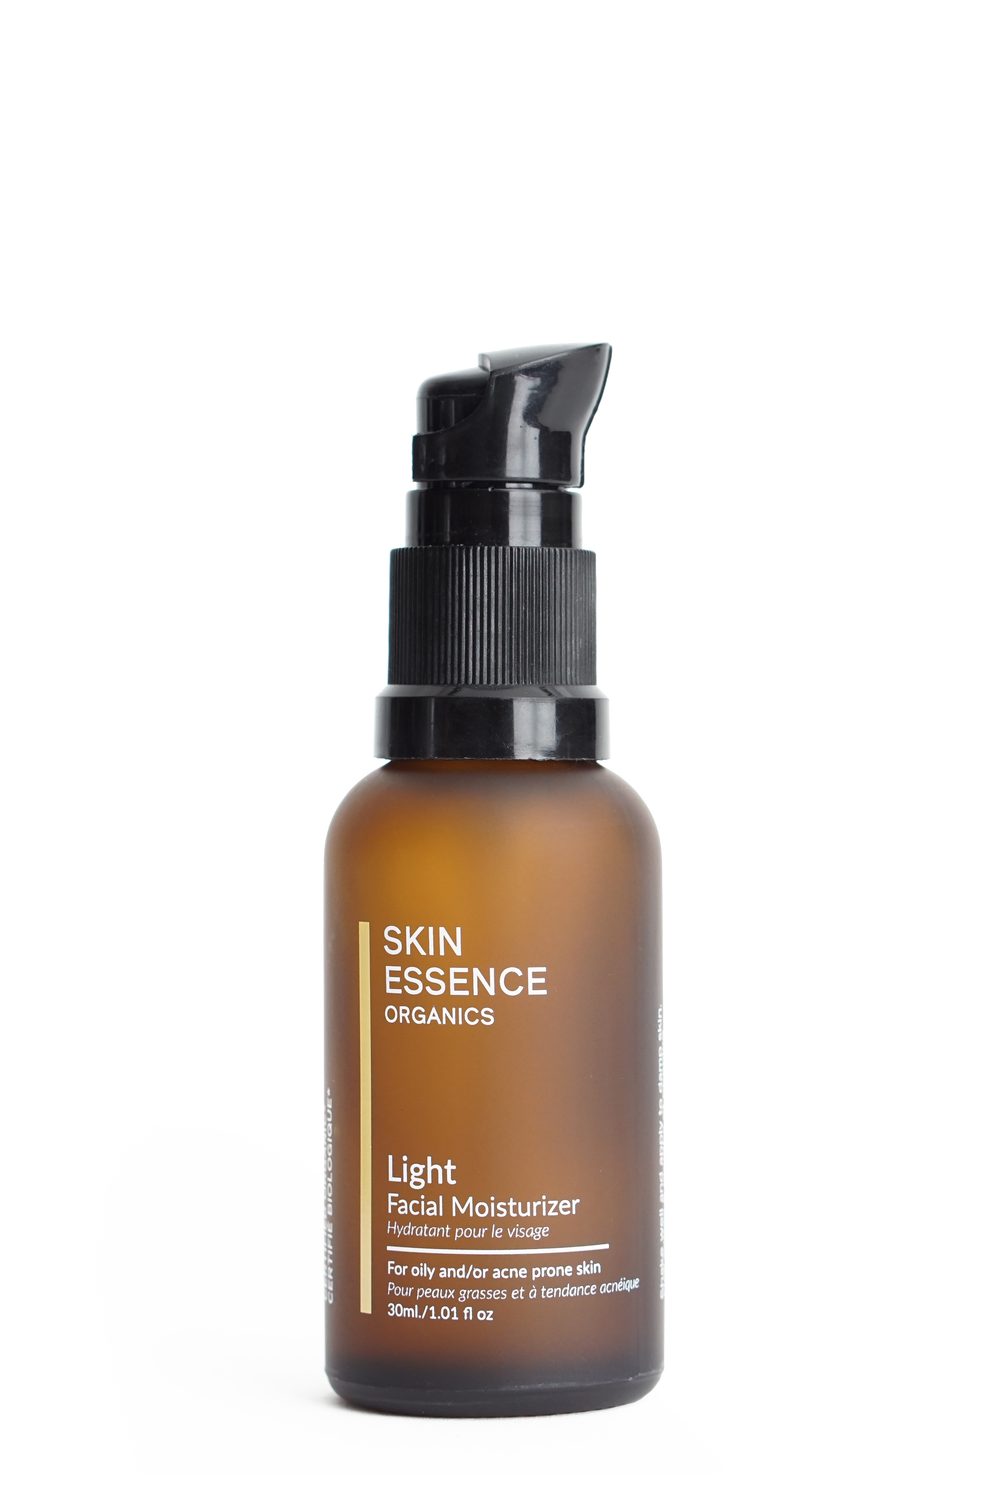 Skin Essence Organics Light Facial Moisturizer 30mL